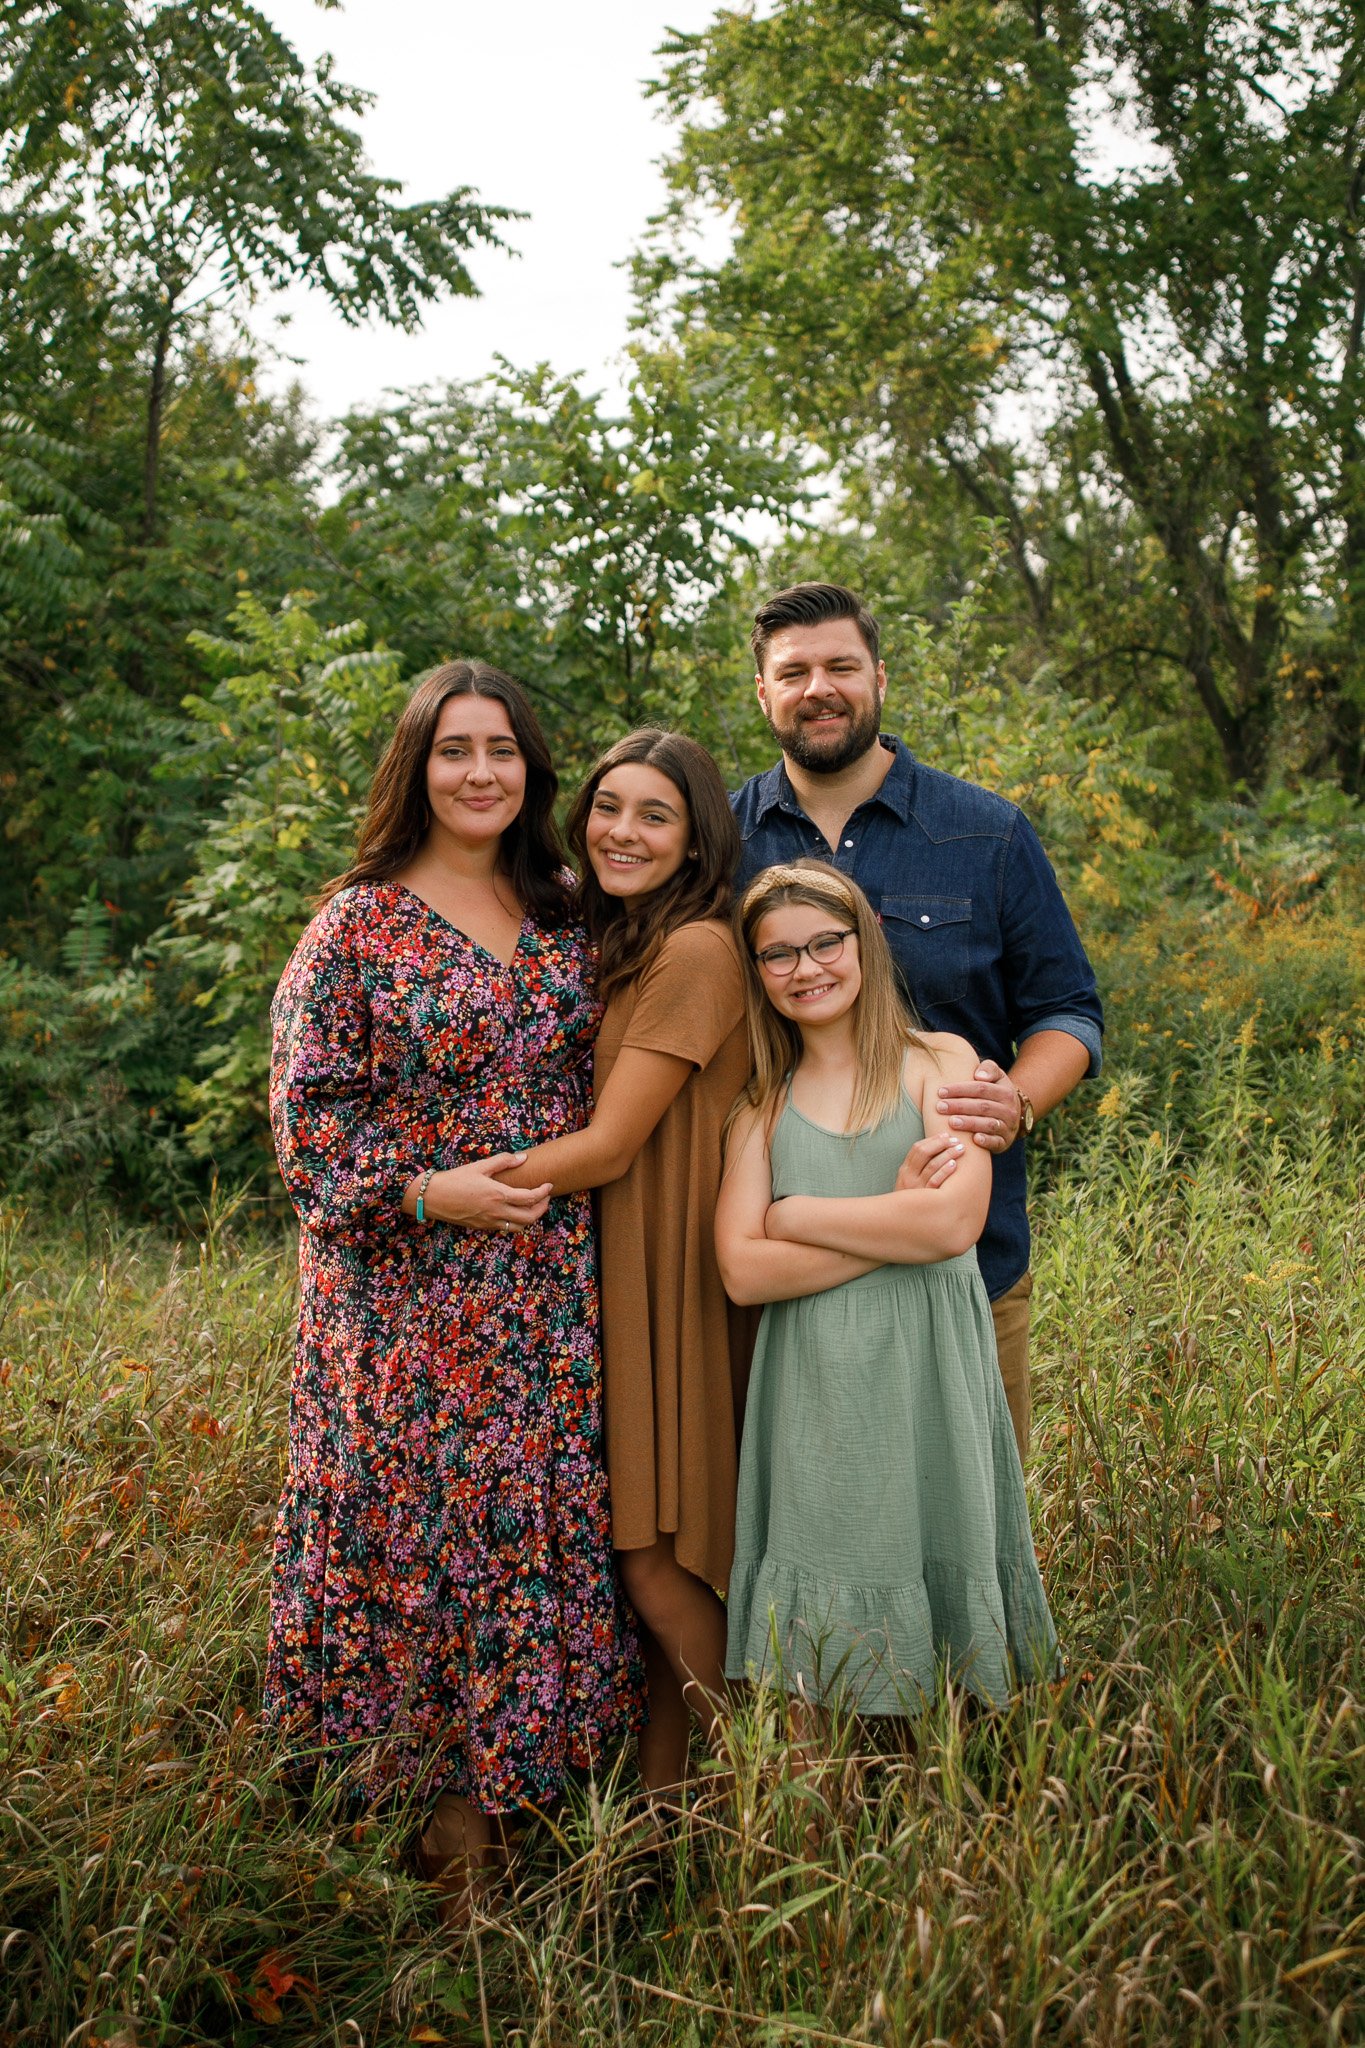 Baker Family Photos - Grand Rapids Family Photographer - Rockford Family Photographer - Ada Family Photographer - Extended Family Portraits - Jessica Darling - J Darling Photo040.jpg